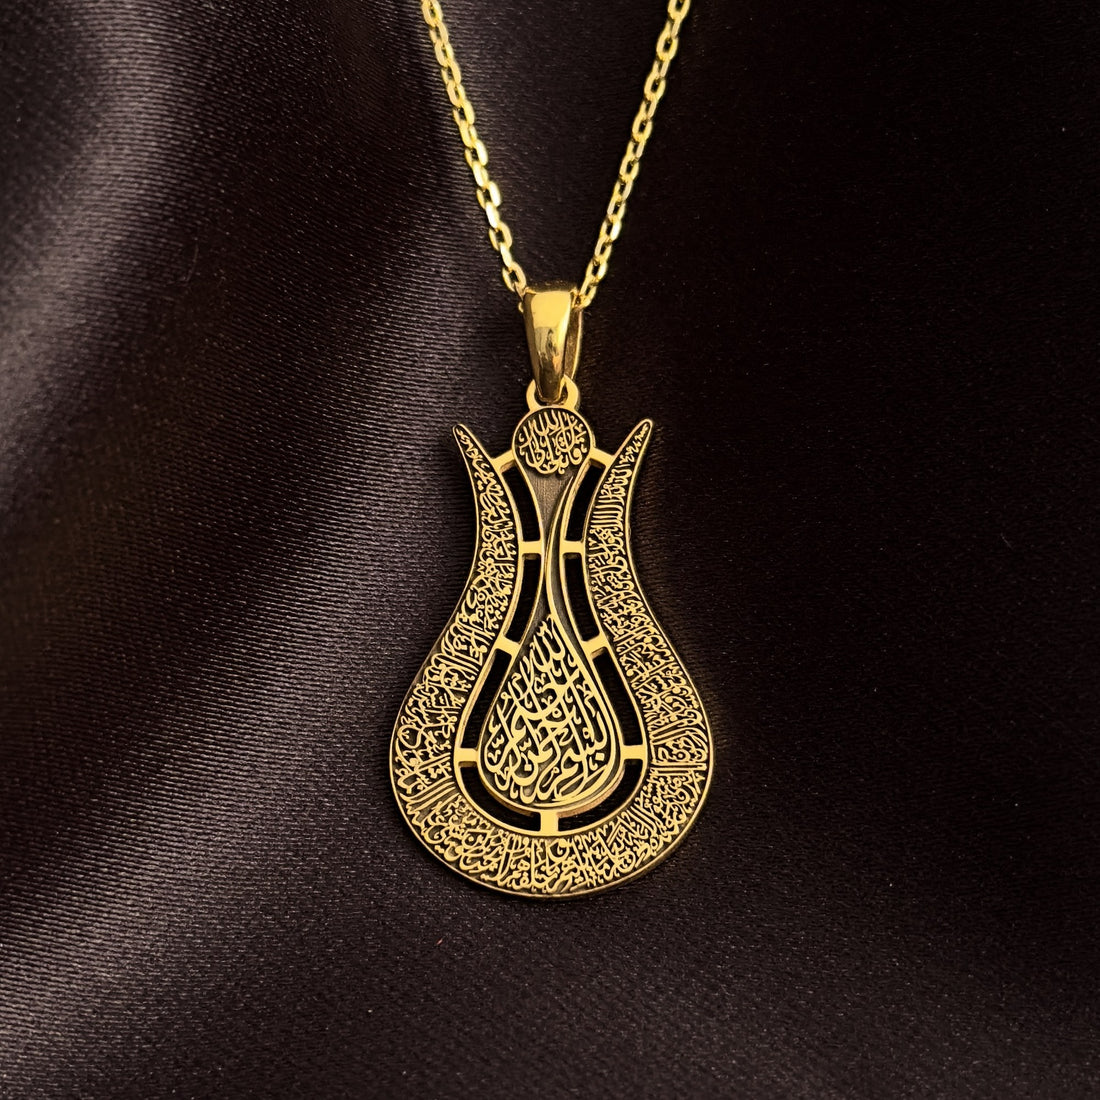 islamic-jewelry-ayatul-kursi-tulip-islamic-necklace-18k-gold-pendant-on-925-silver-elegant-design-with-quranic-verse-shukranislamicart